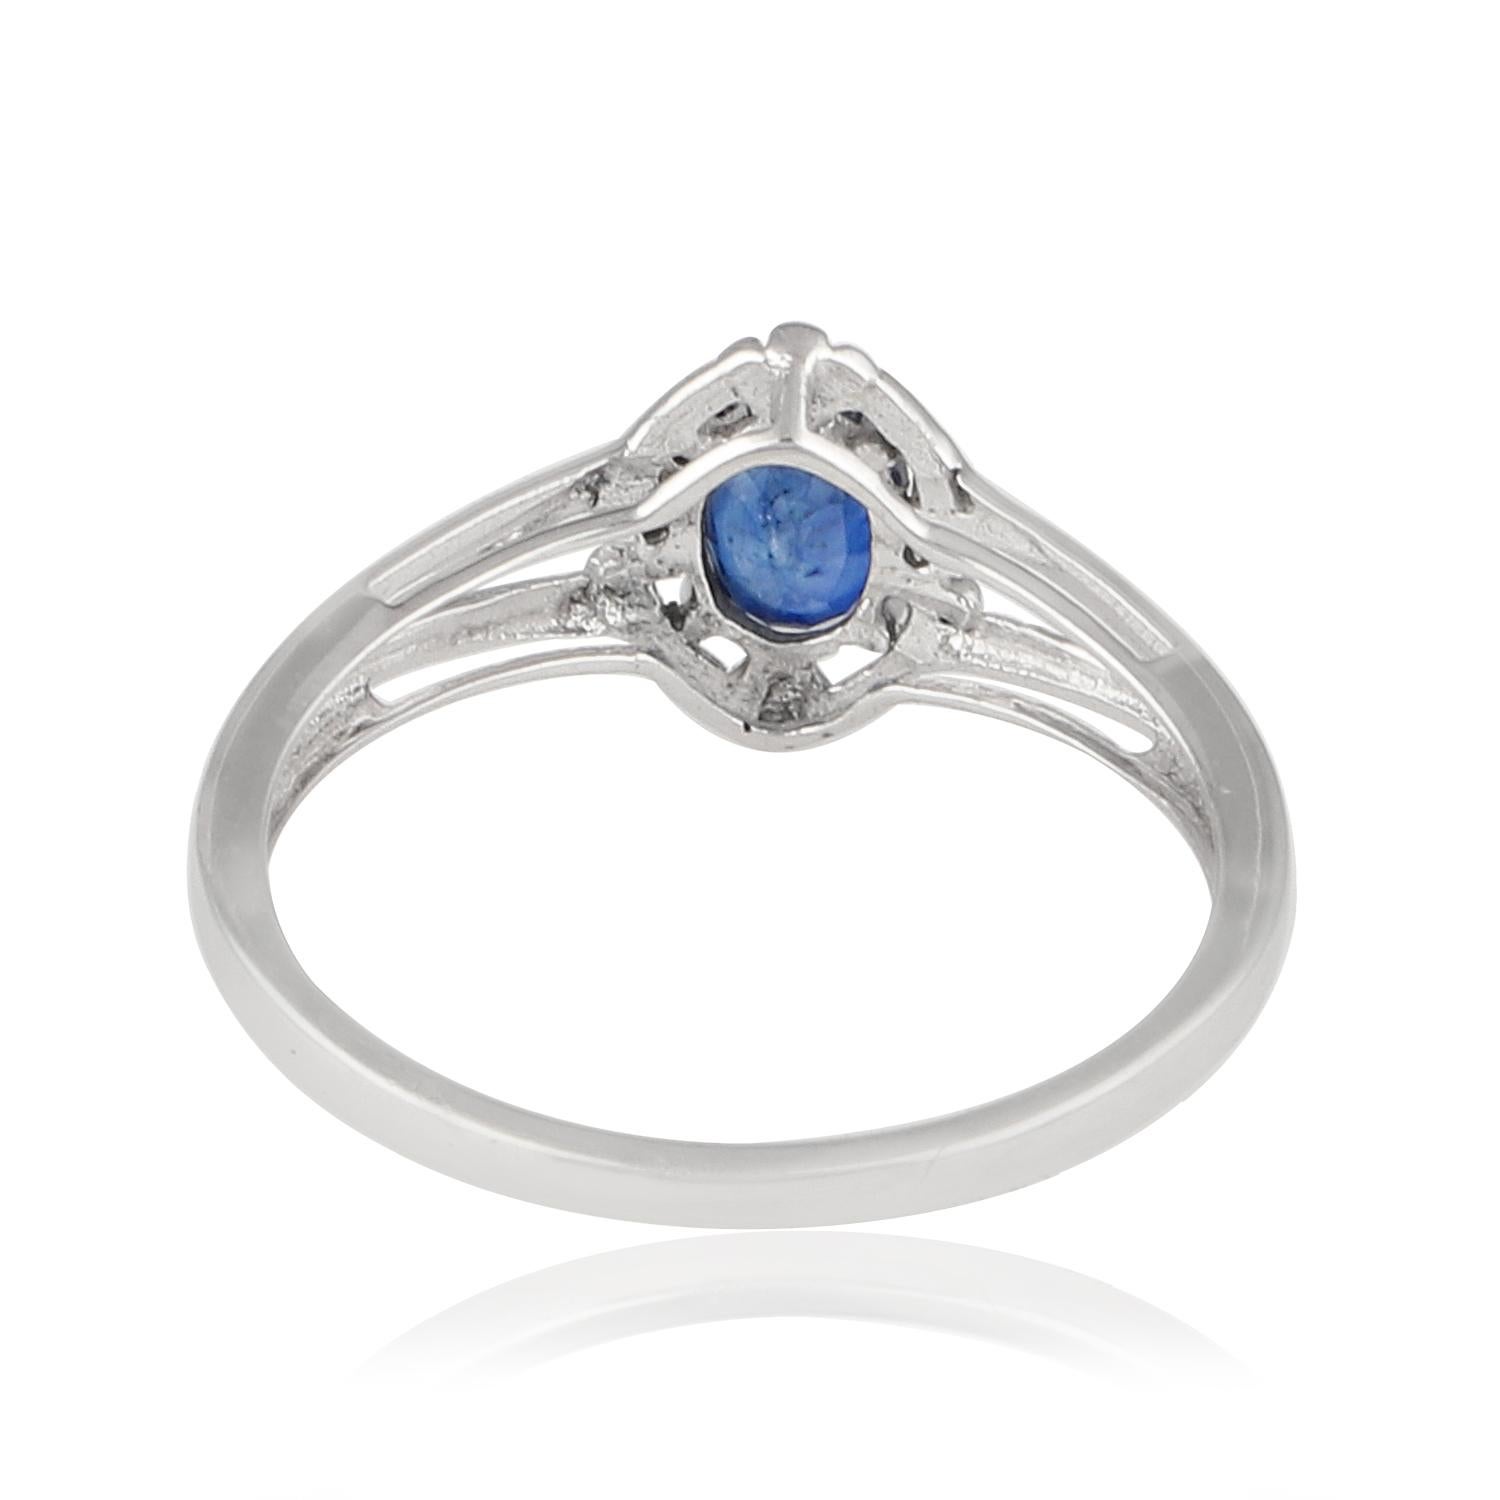 For Sale:  Natural Blue Sapphire Gemstone Ring Diamond Pave 9 Karat White Gold Fine Jewelry 3